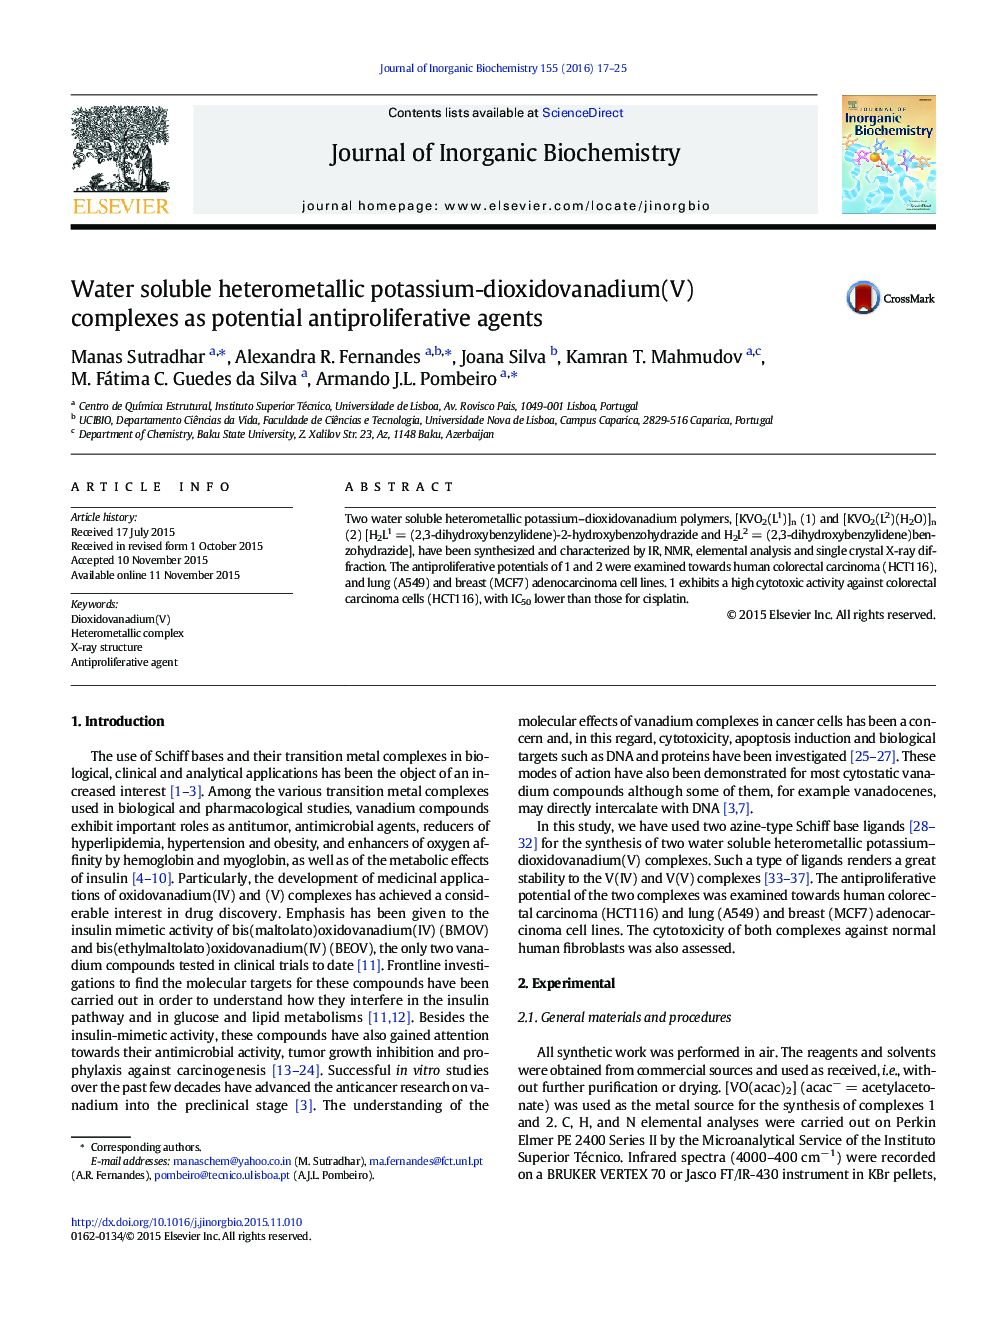 Water soluble heterometallic potassium-dioxidovanadium(V) complexes as potential antiproliferative agents